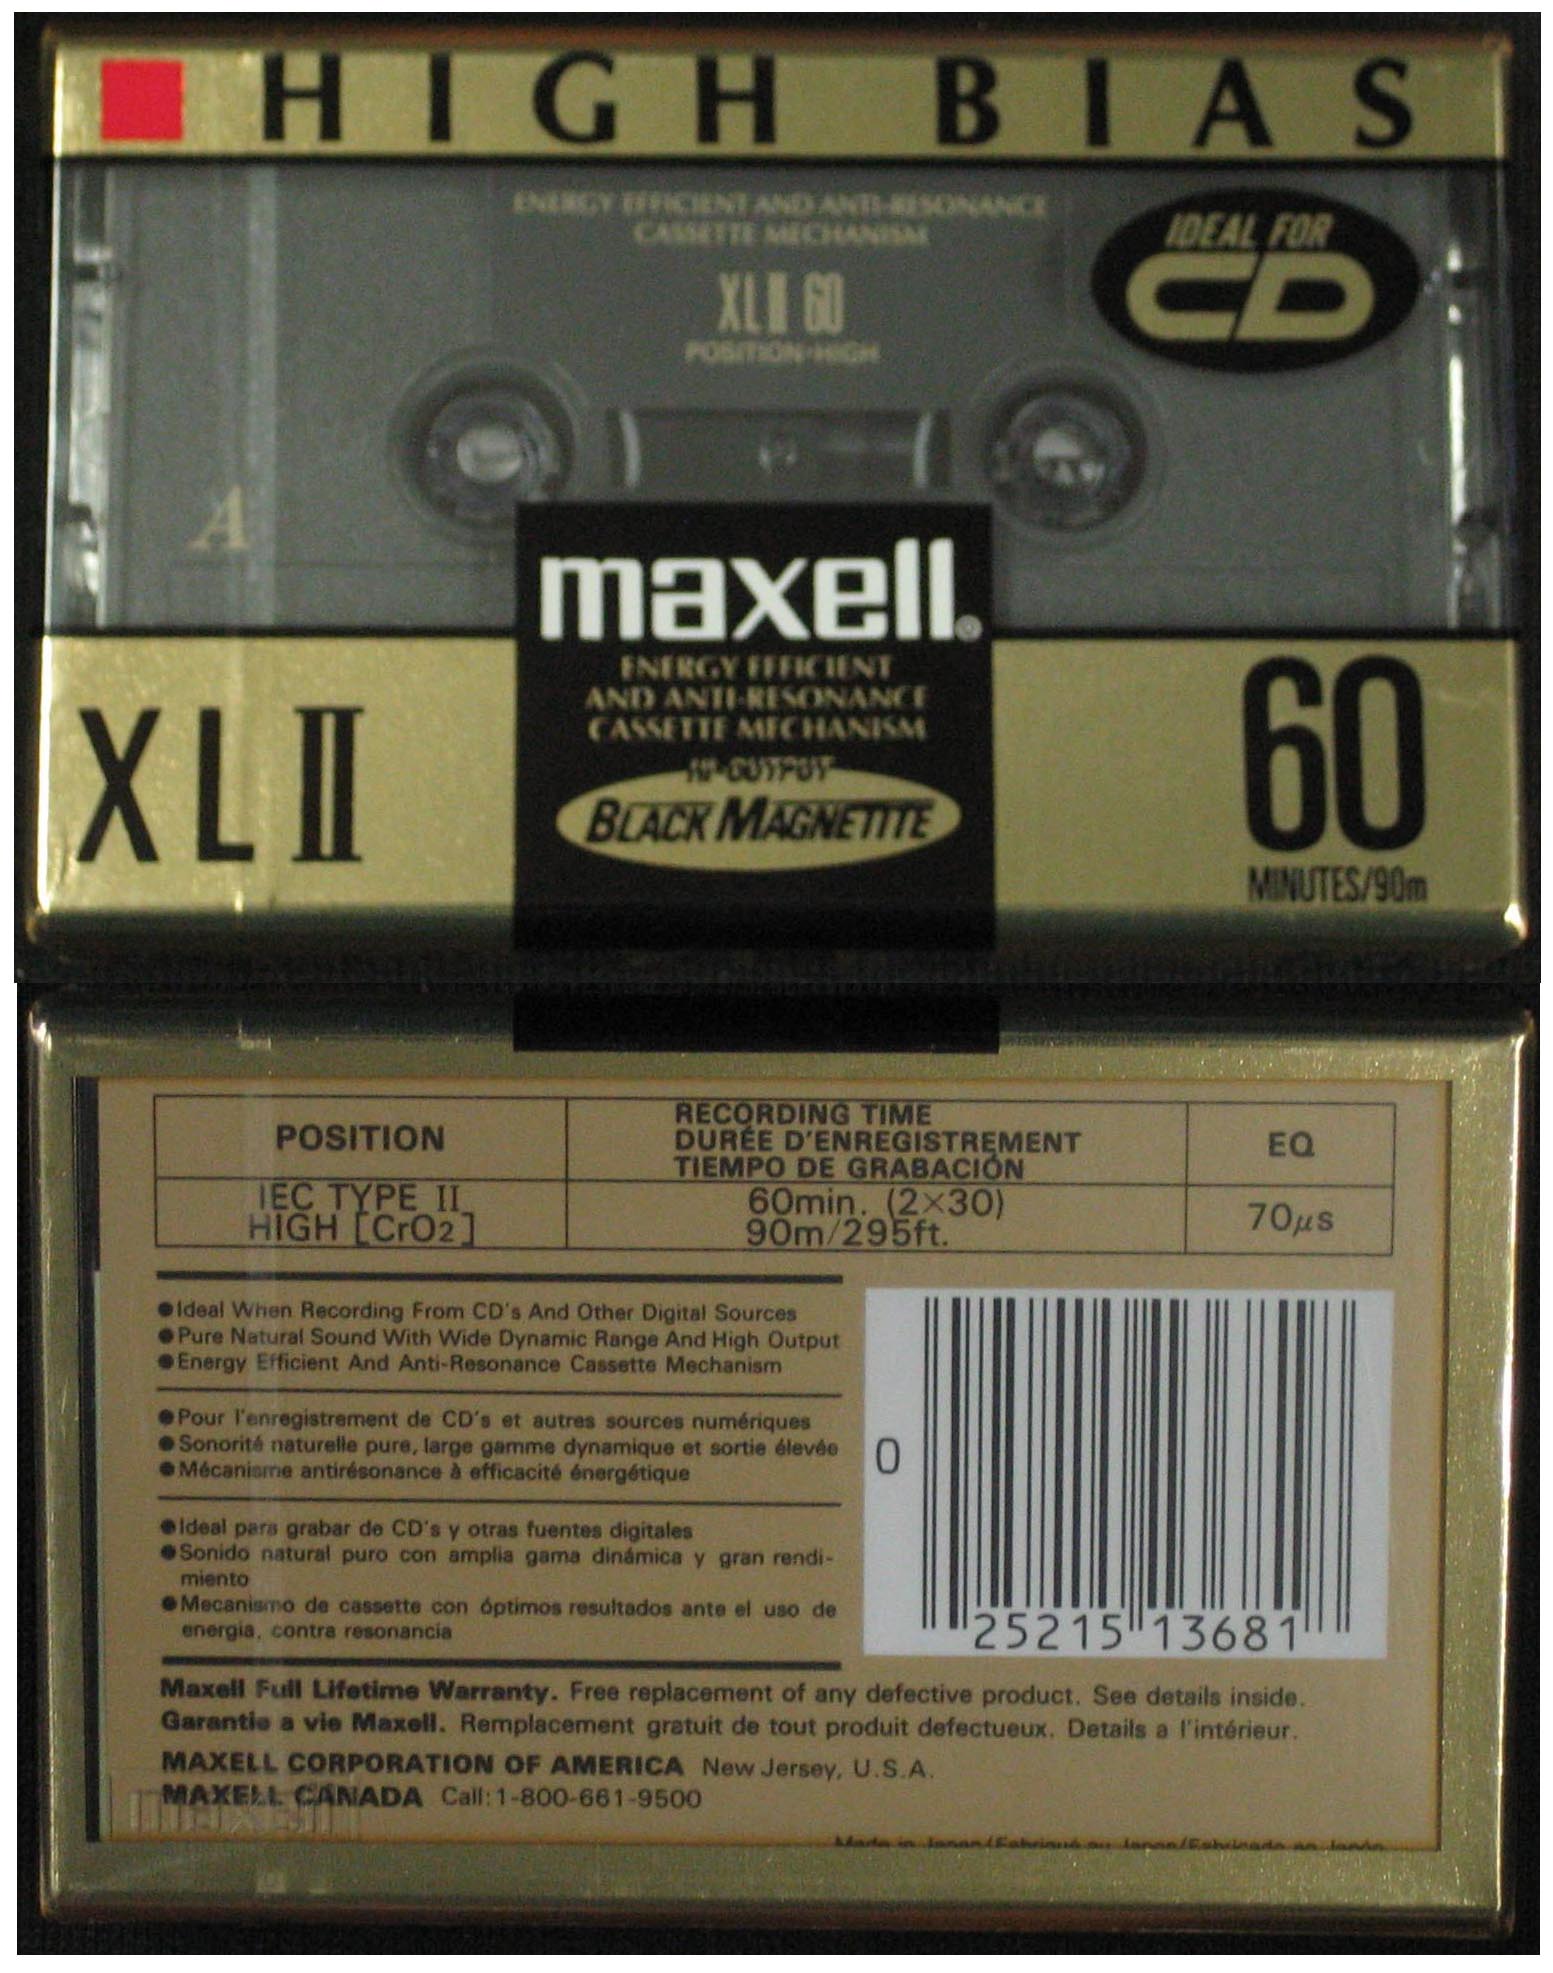 MAXELL_XLII60.JPG